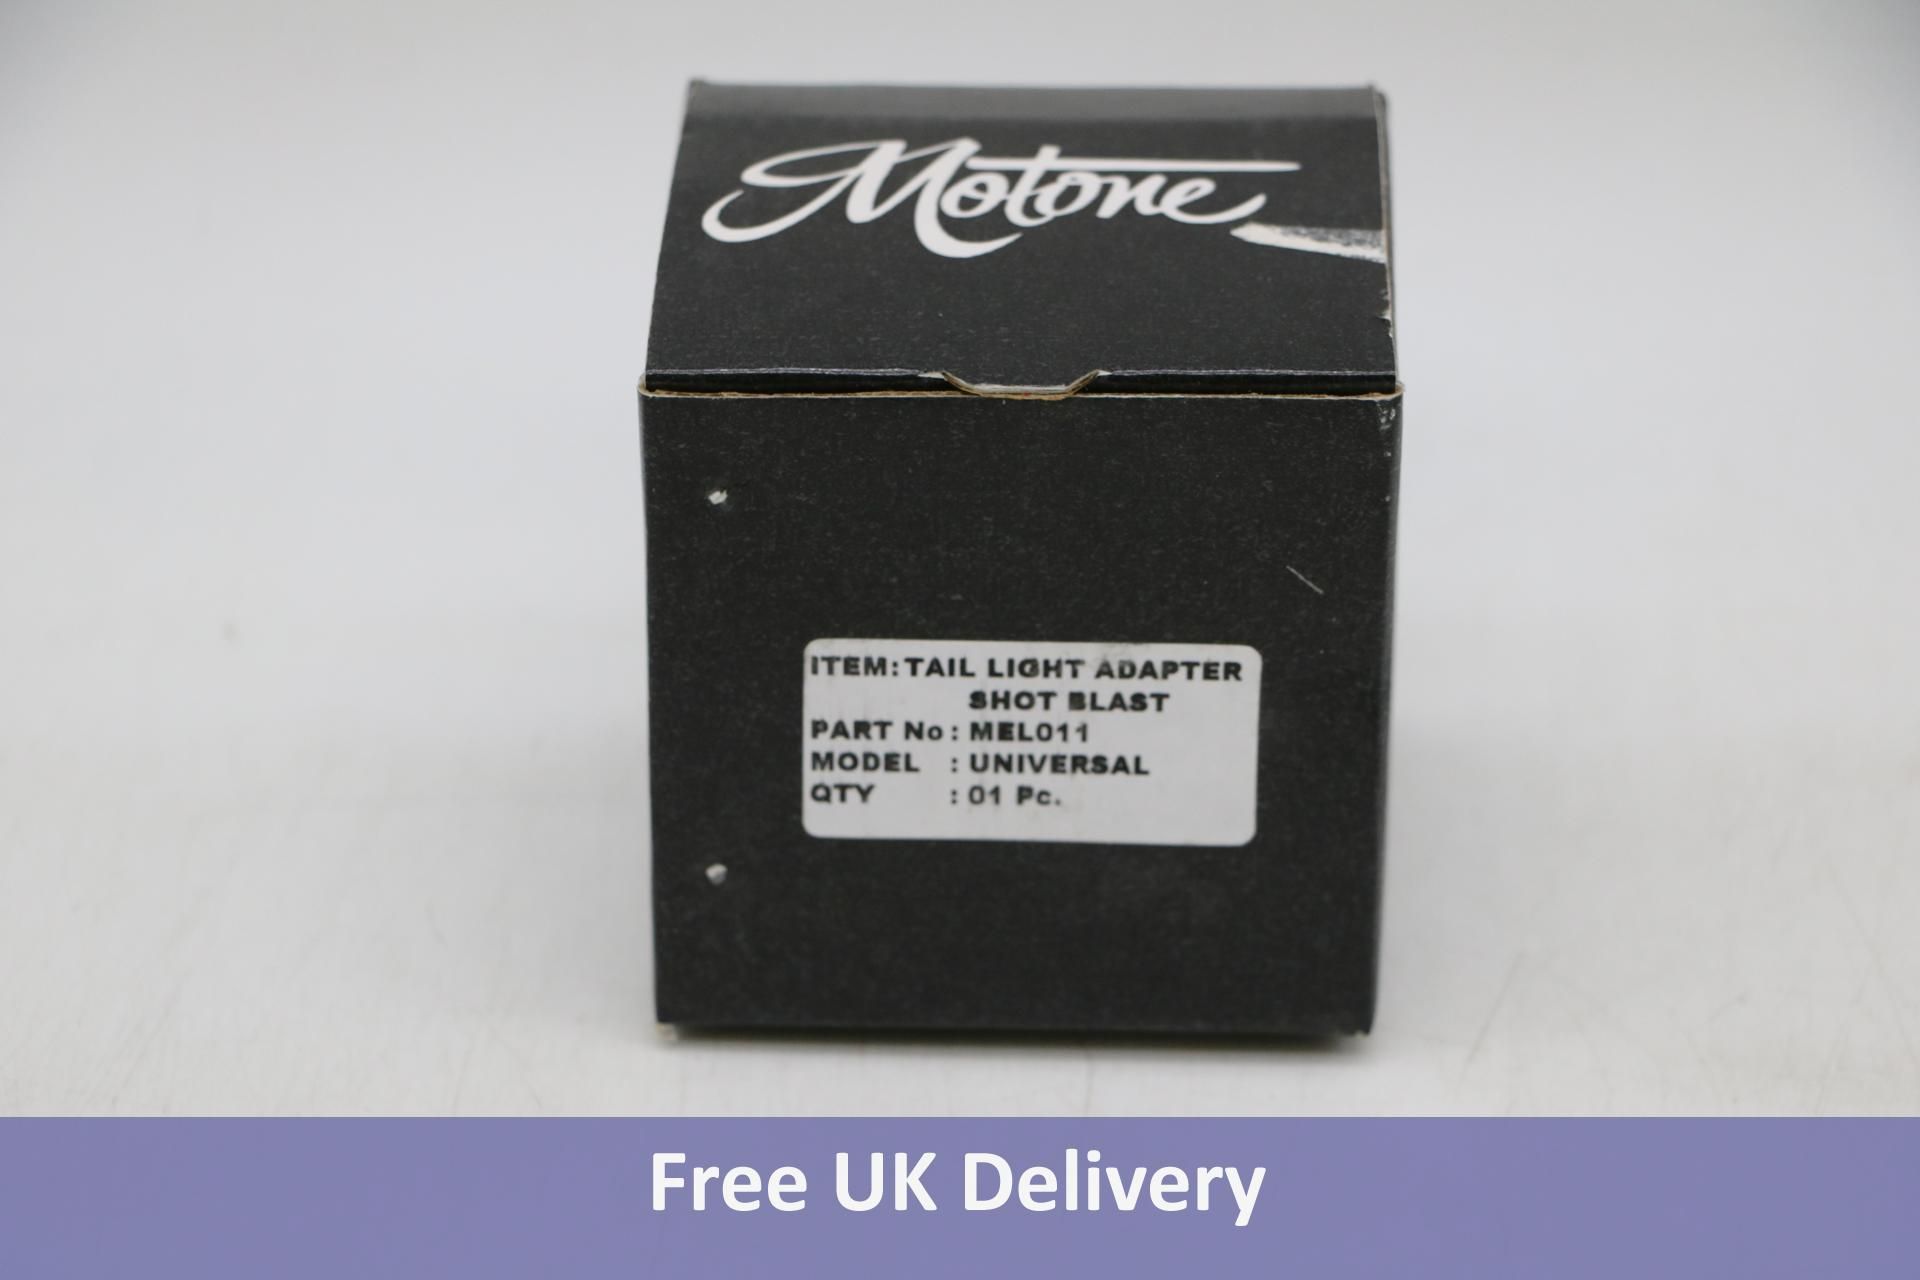 Three Motone Customs Tail Light Adapter Shot Blast Universal, MEL011